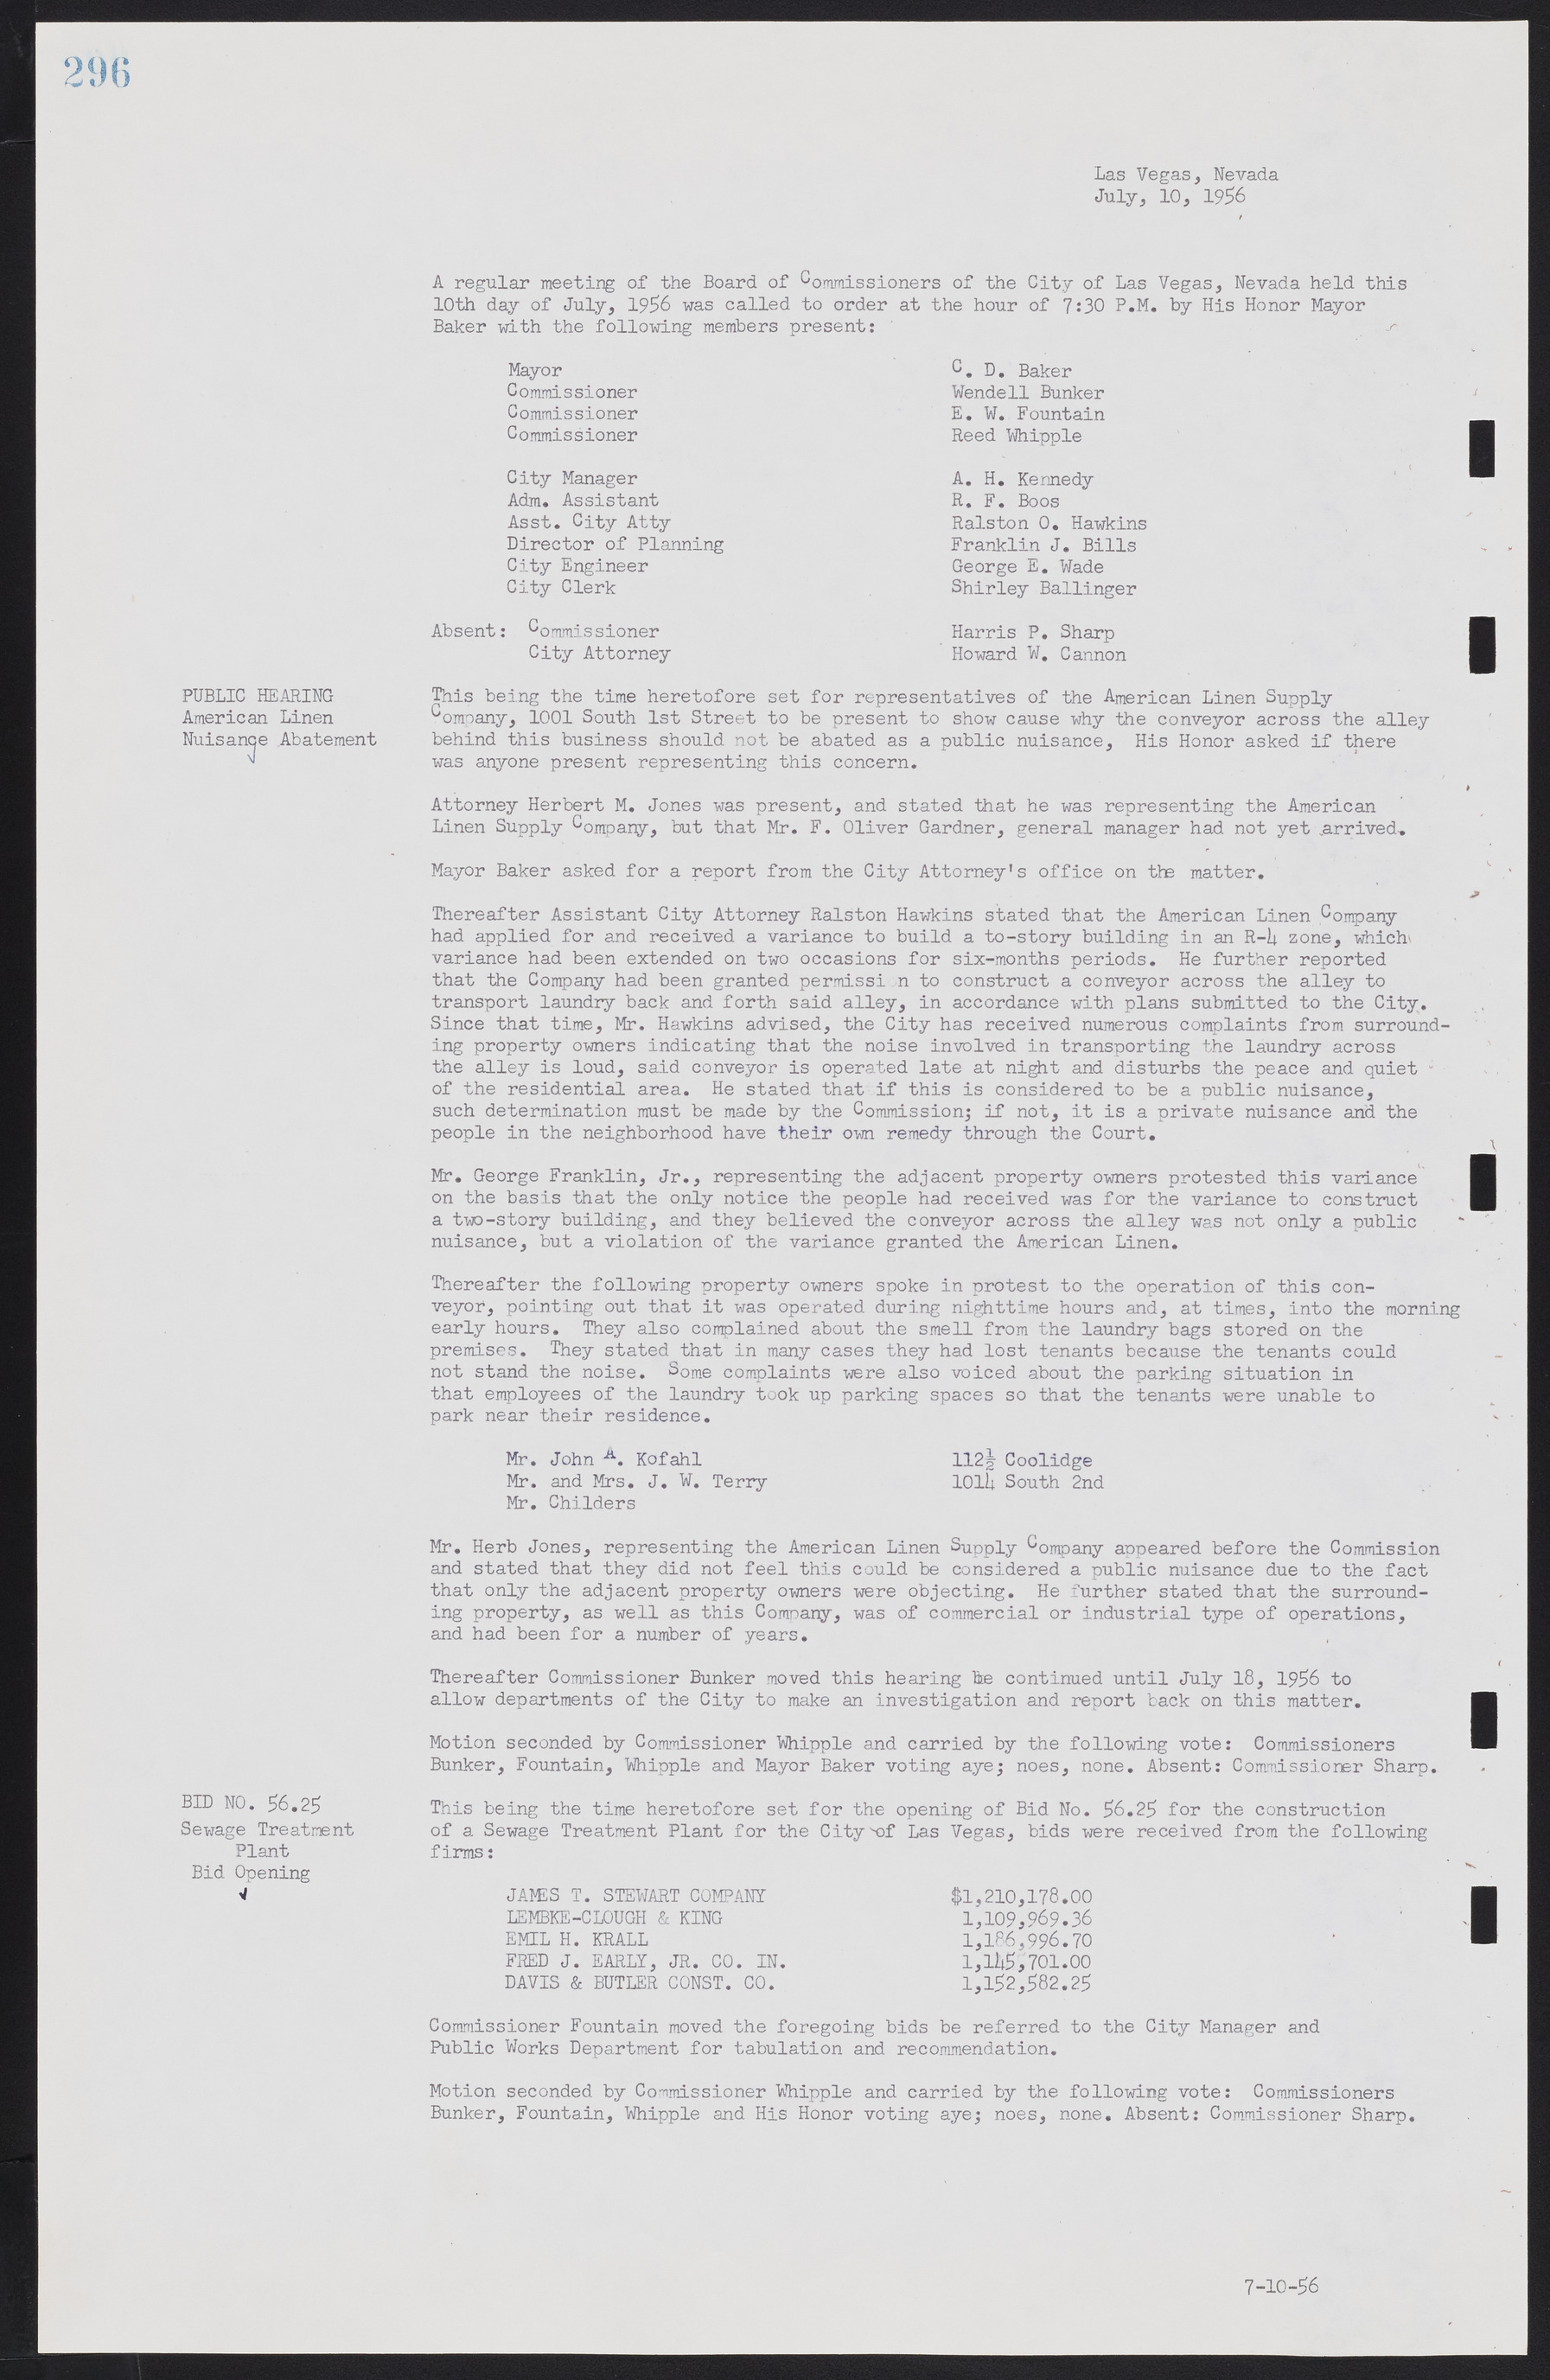 Las Vegas City Commission Minutes, September 21, 1955 to November 20, 1957, lvc000010-316